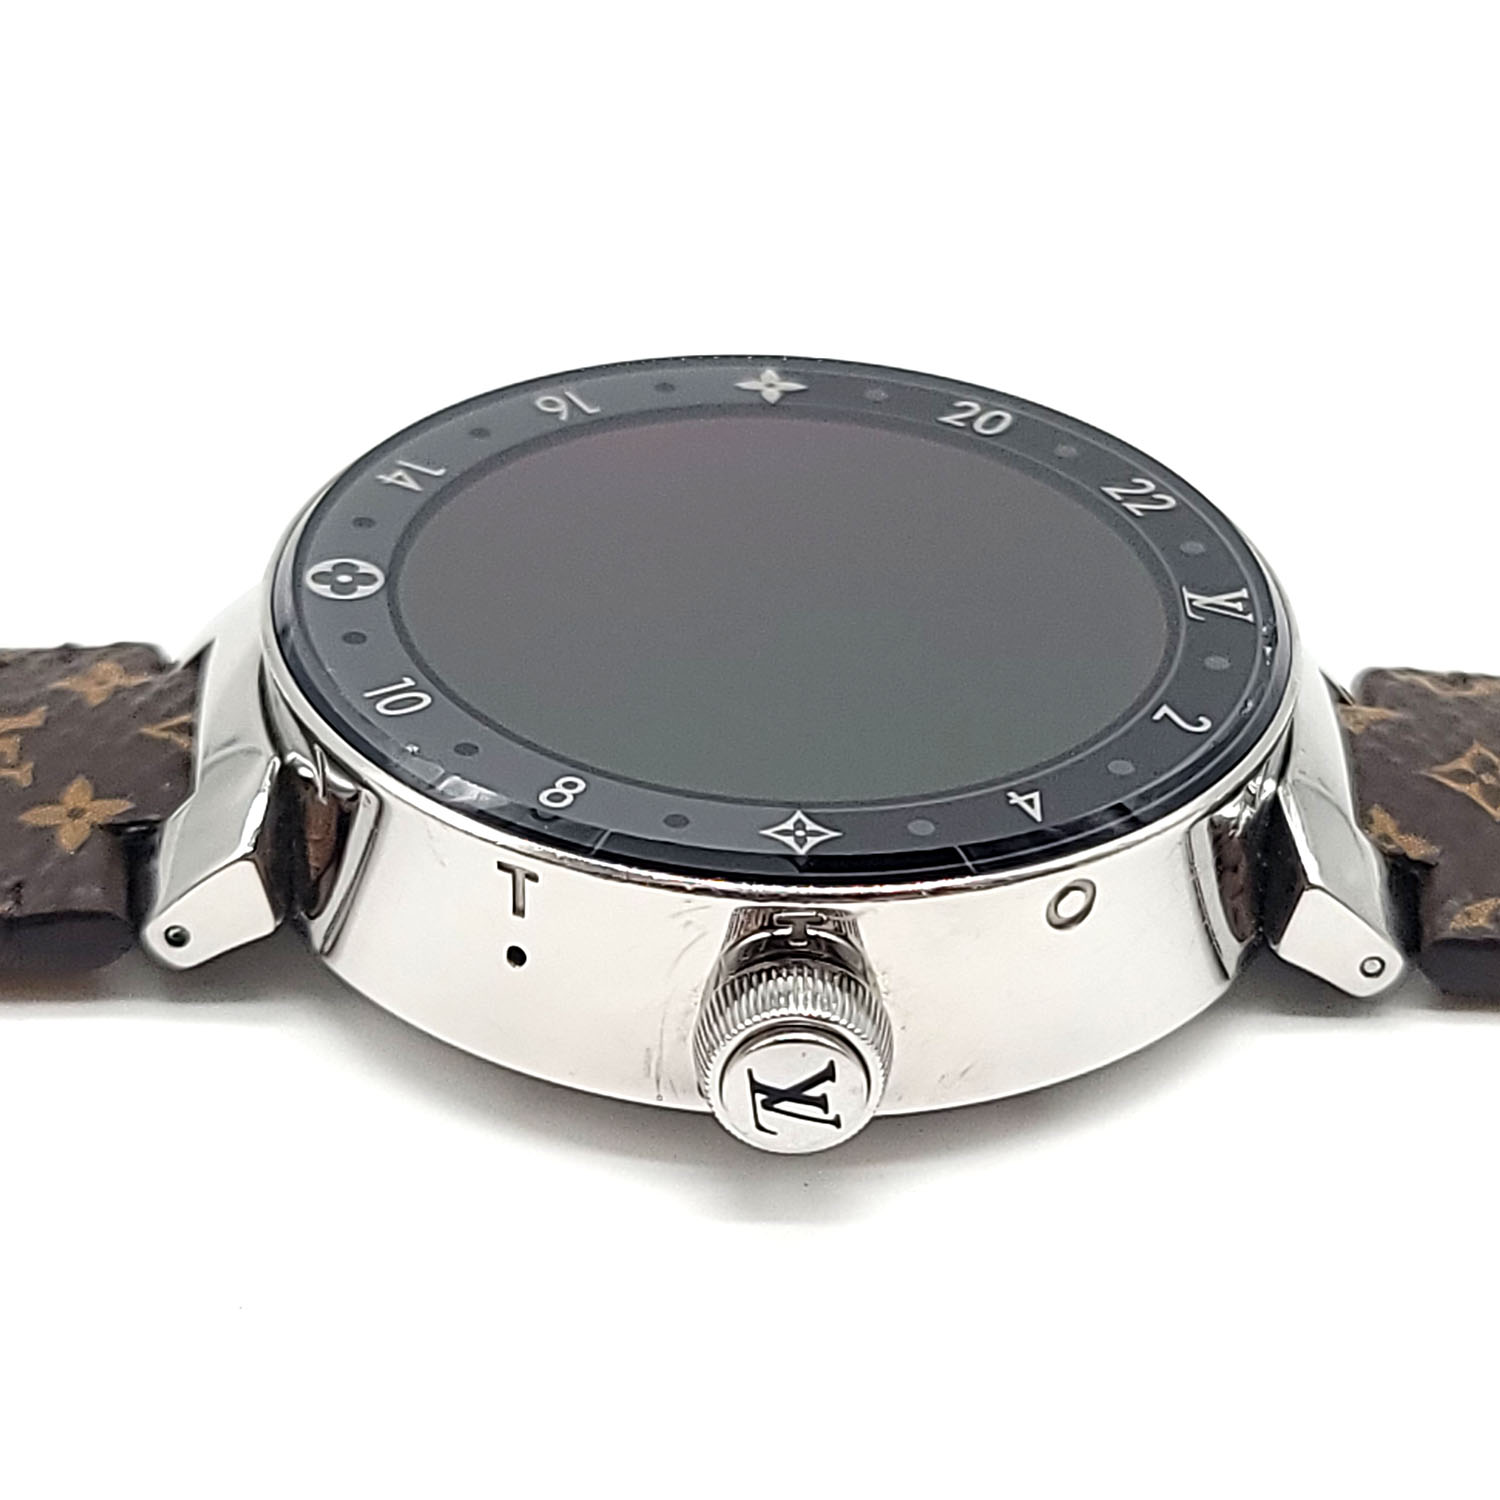 Louis Vuitton Tambour Horizon Monogram – The Watch Pages